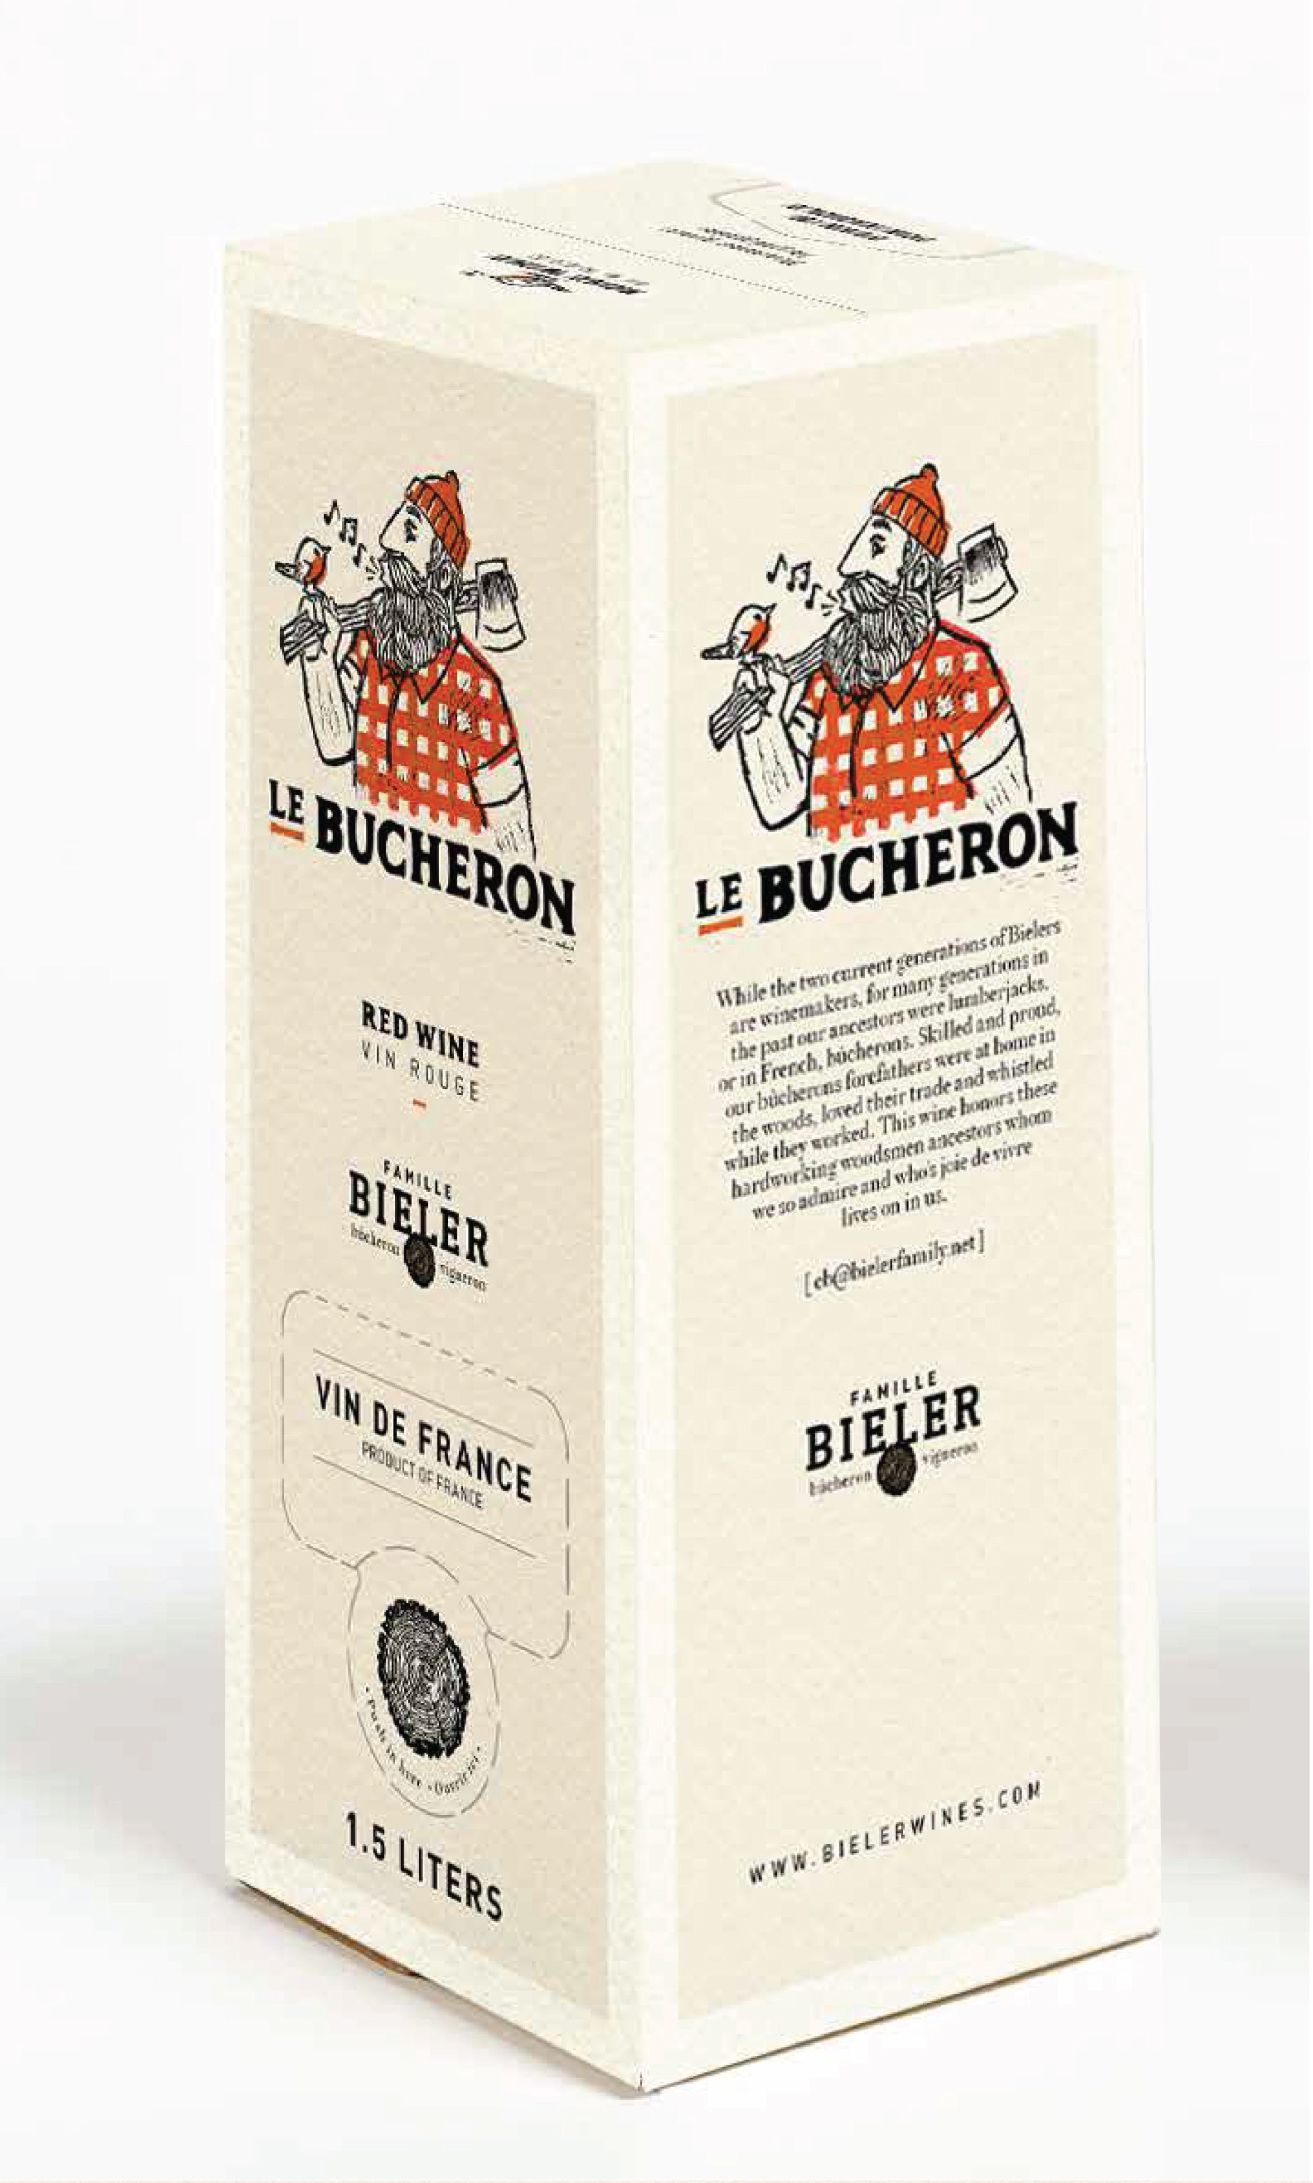 https://www.skurnik.com/wp-content/uploads/2019/07/vin-rouge-le-bucheron-bag-in-box-le-famille-bieler-3.jpg